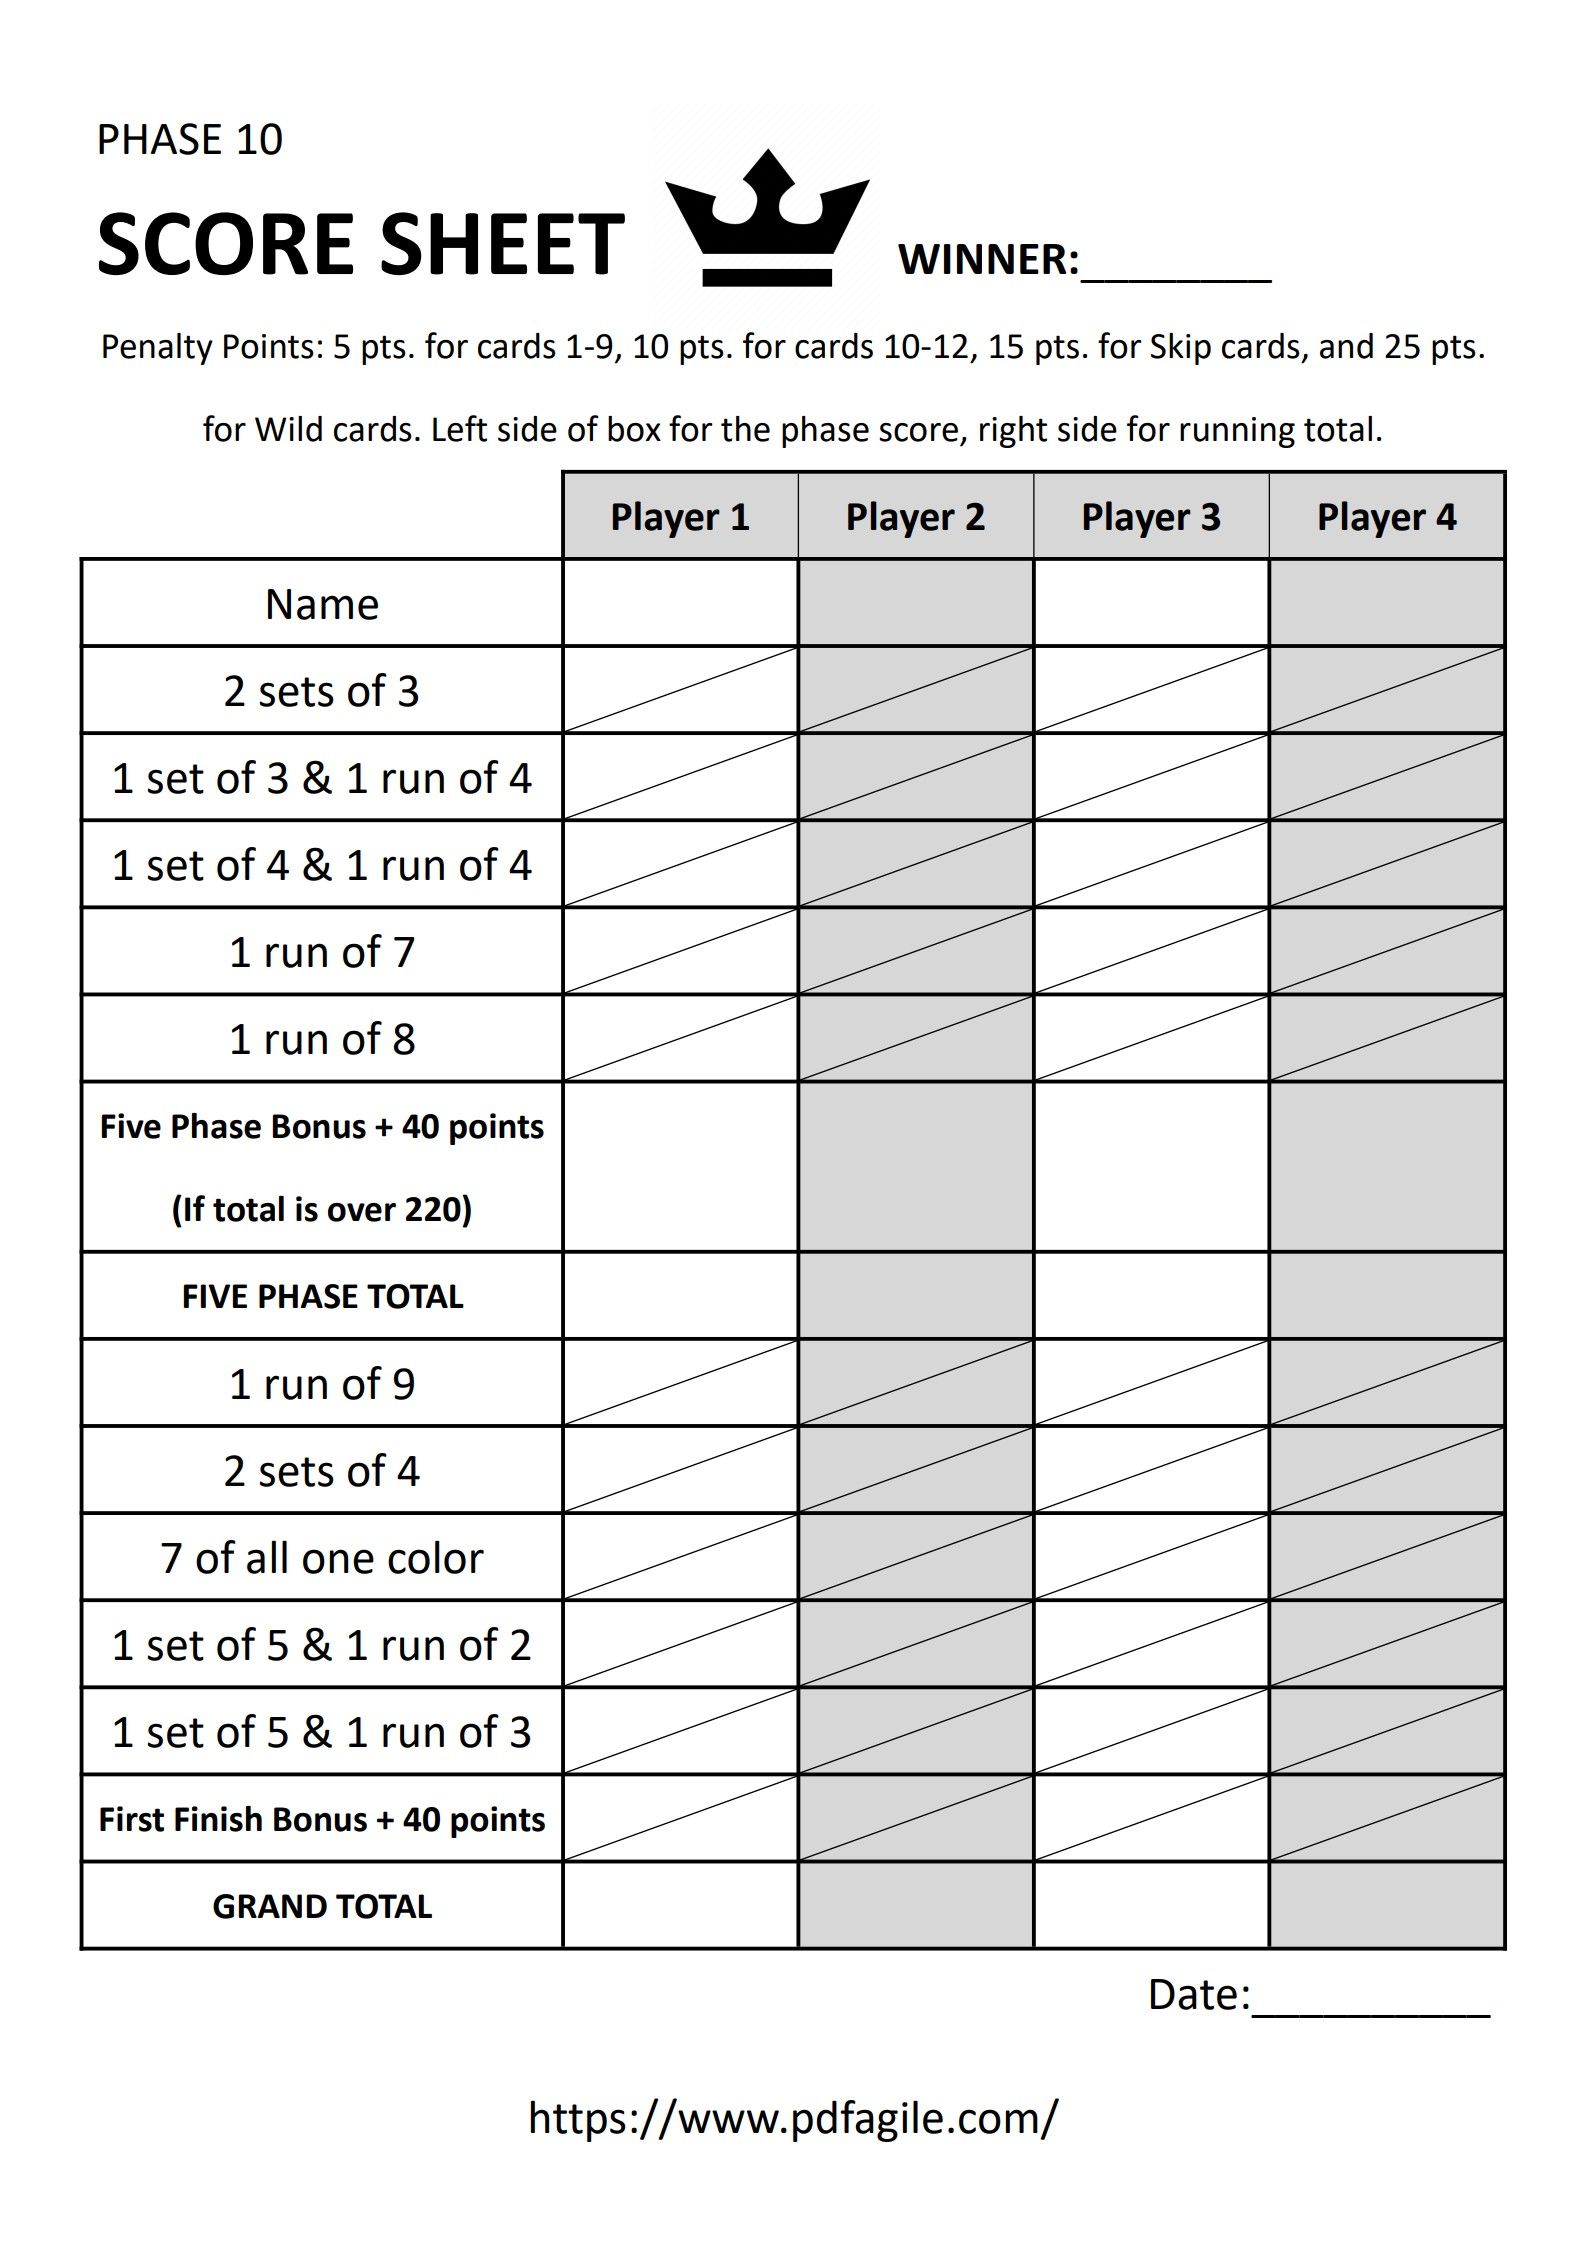 phase 10 scoresheet template